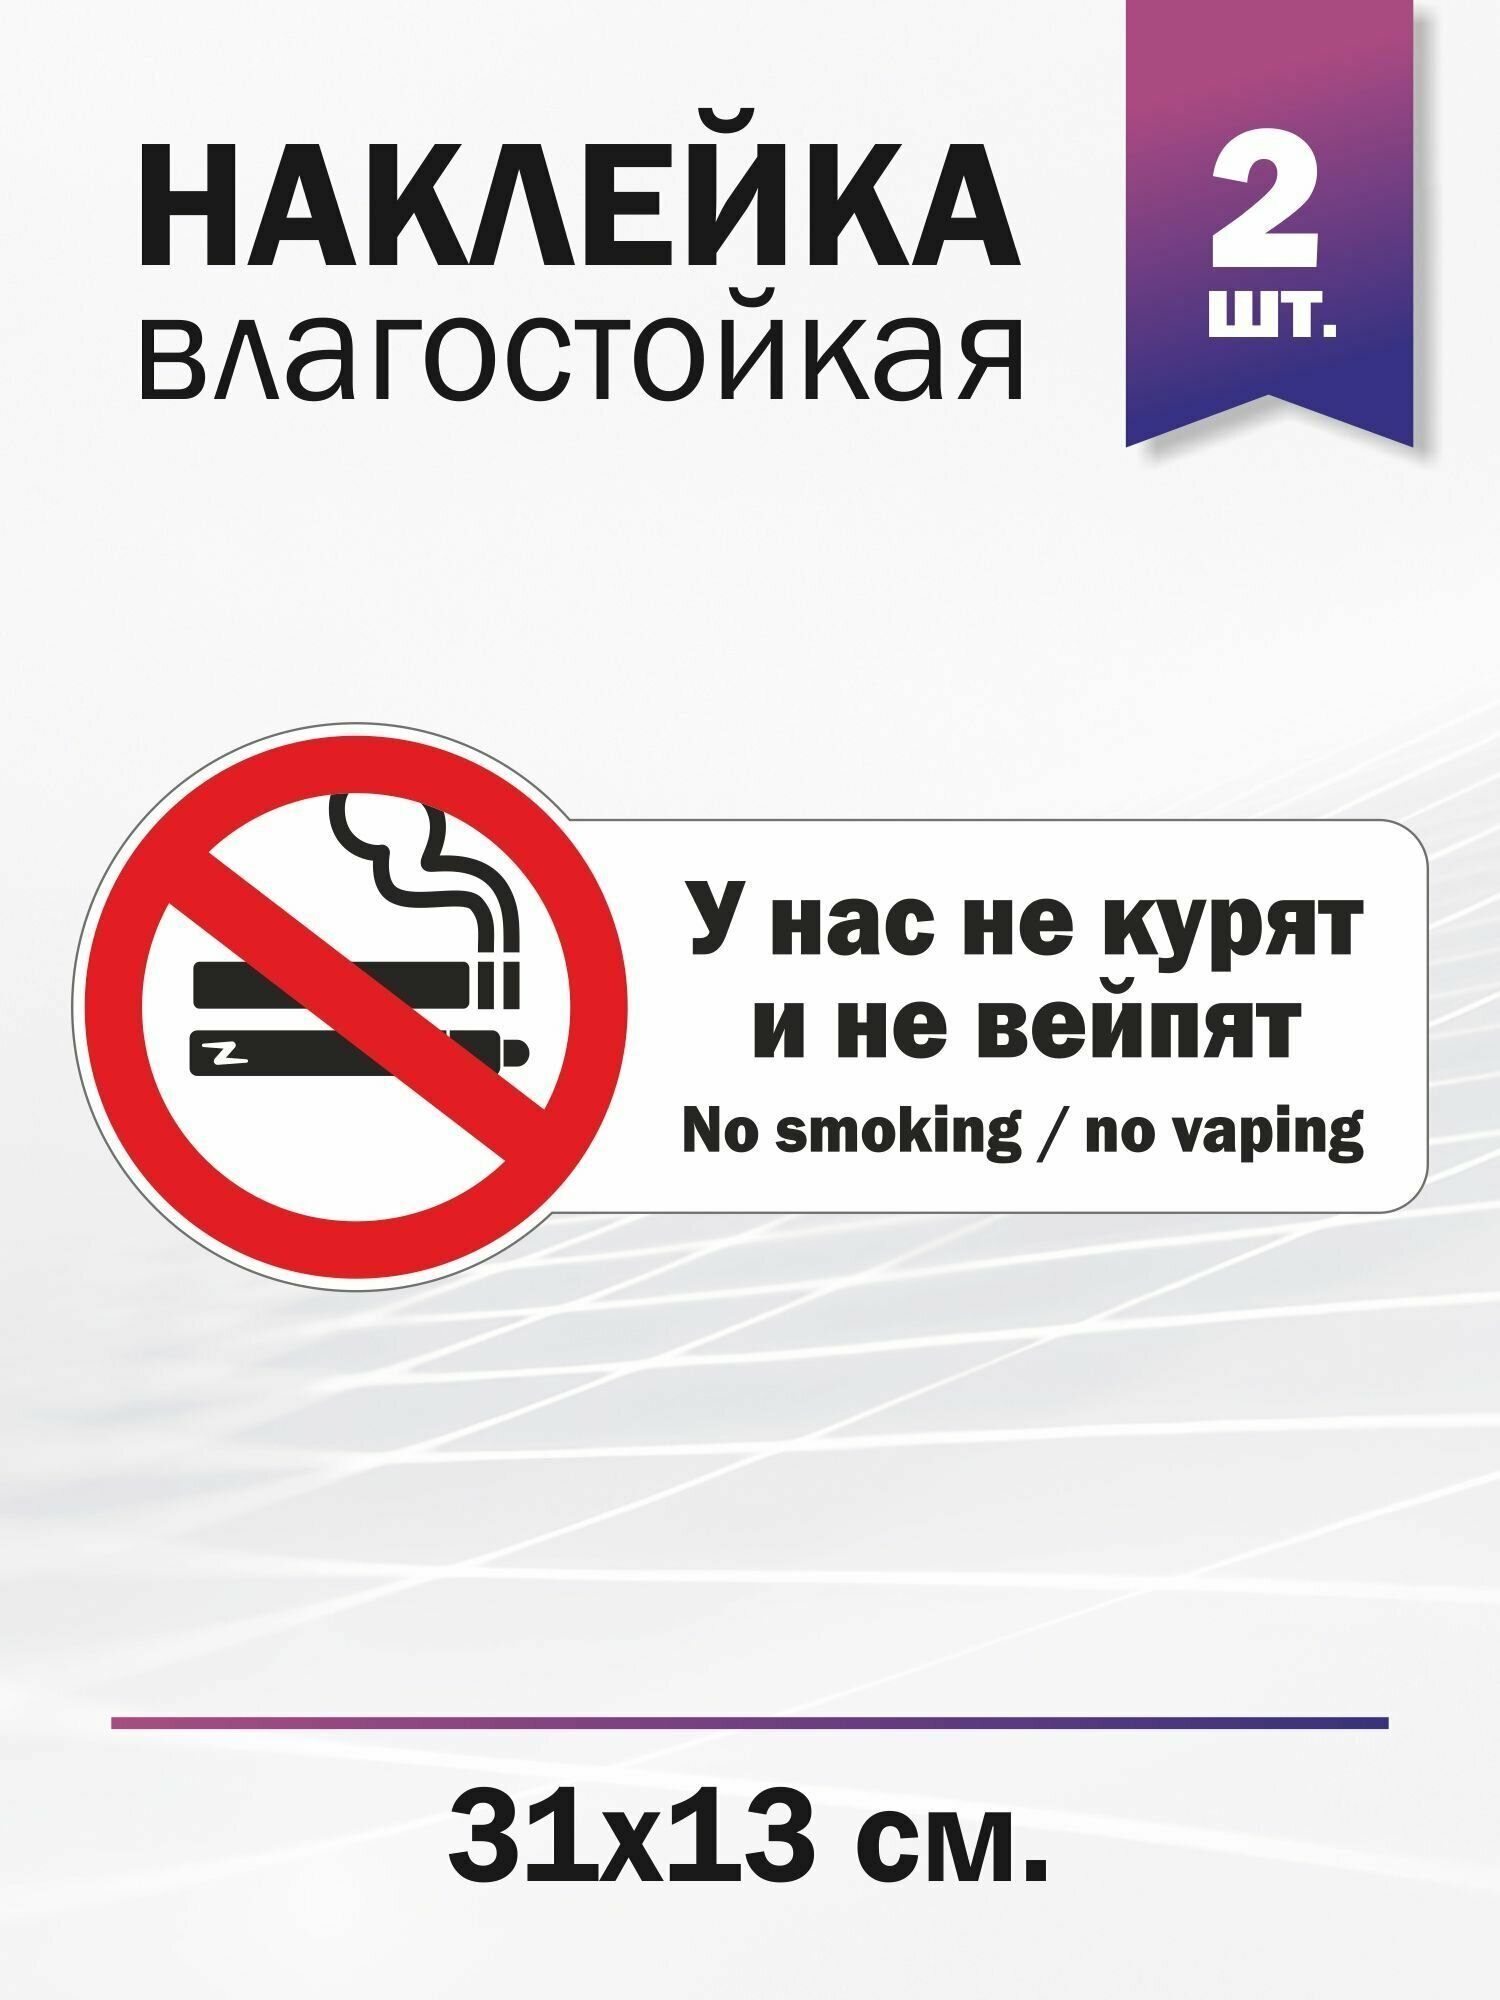 У нас не курят и не вейпят/ no smoking/no vaping, 2 штуки